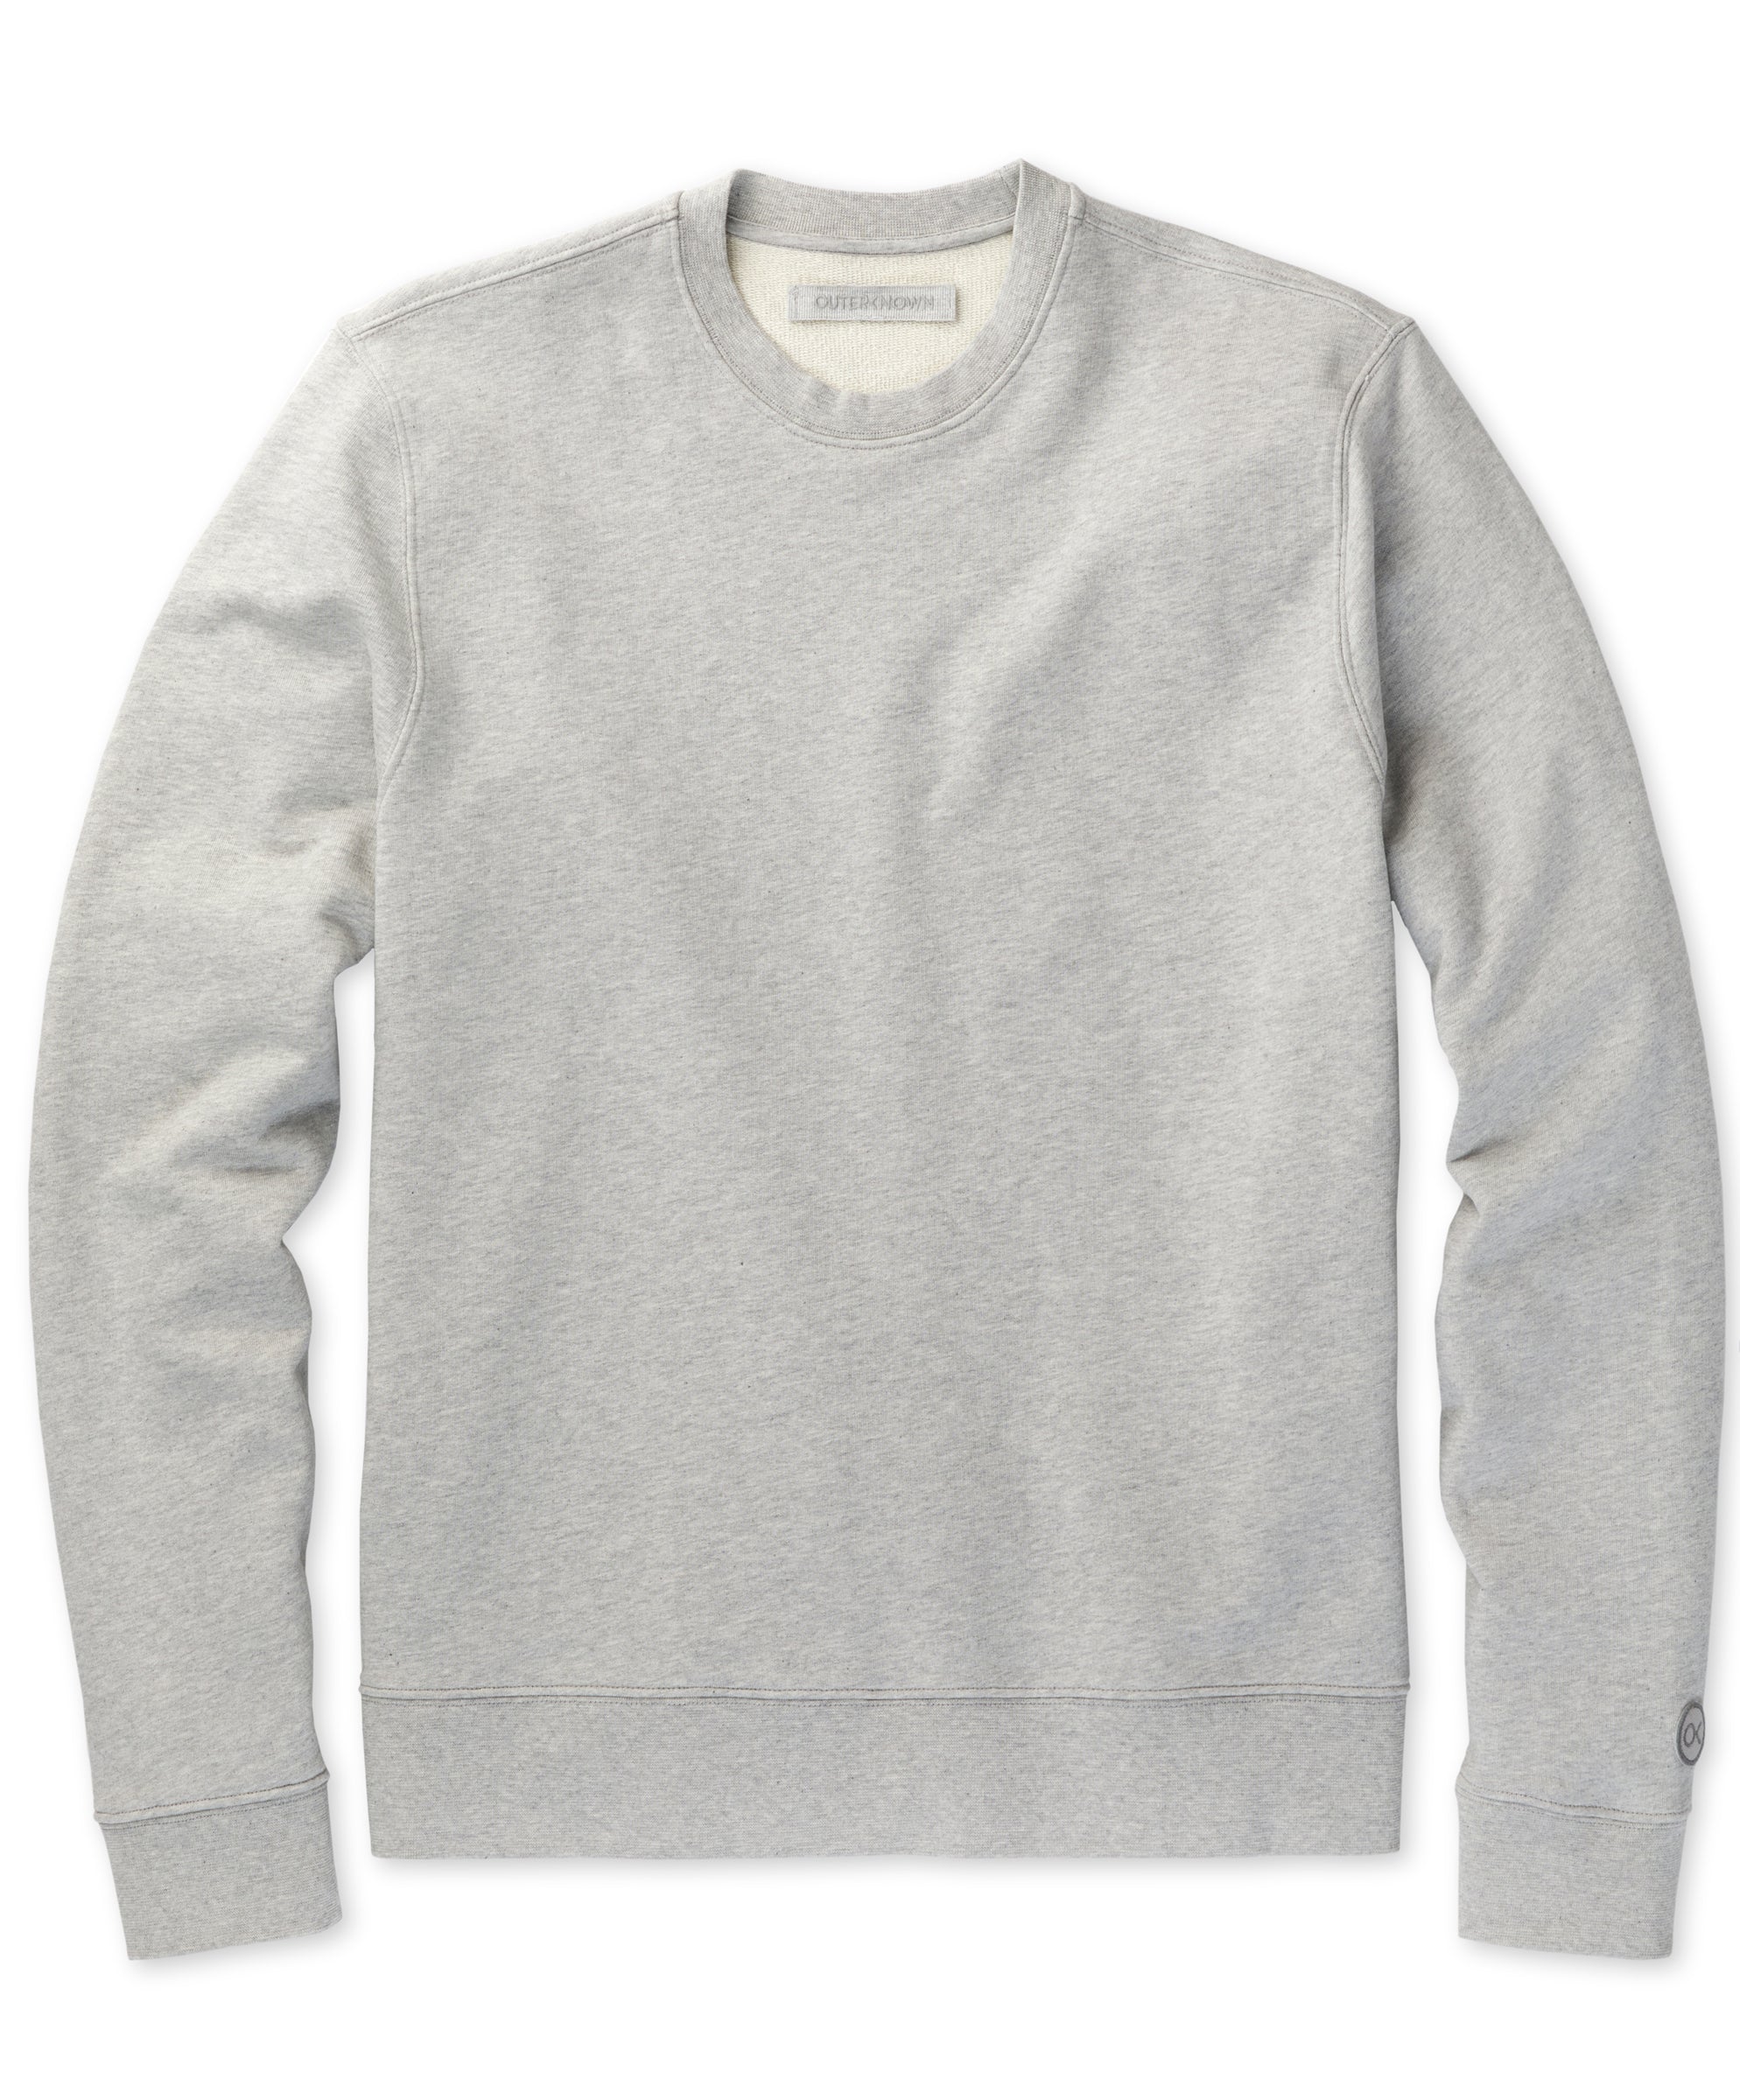 Sunday Sweatshirt | Men's Sweatshirts | Outerknown